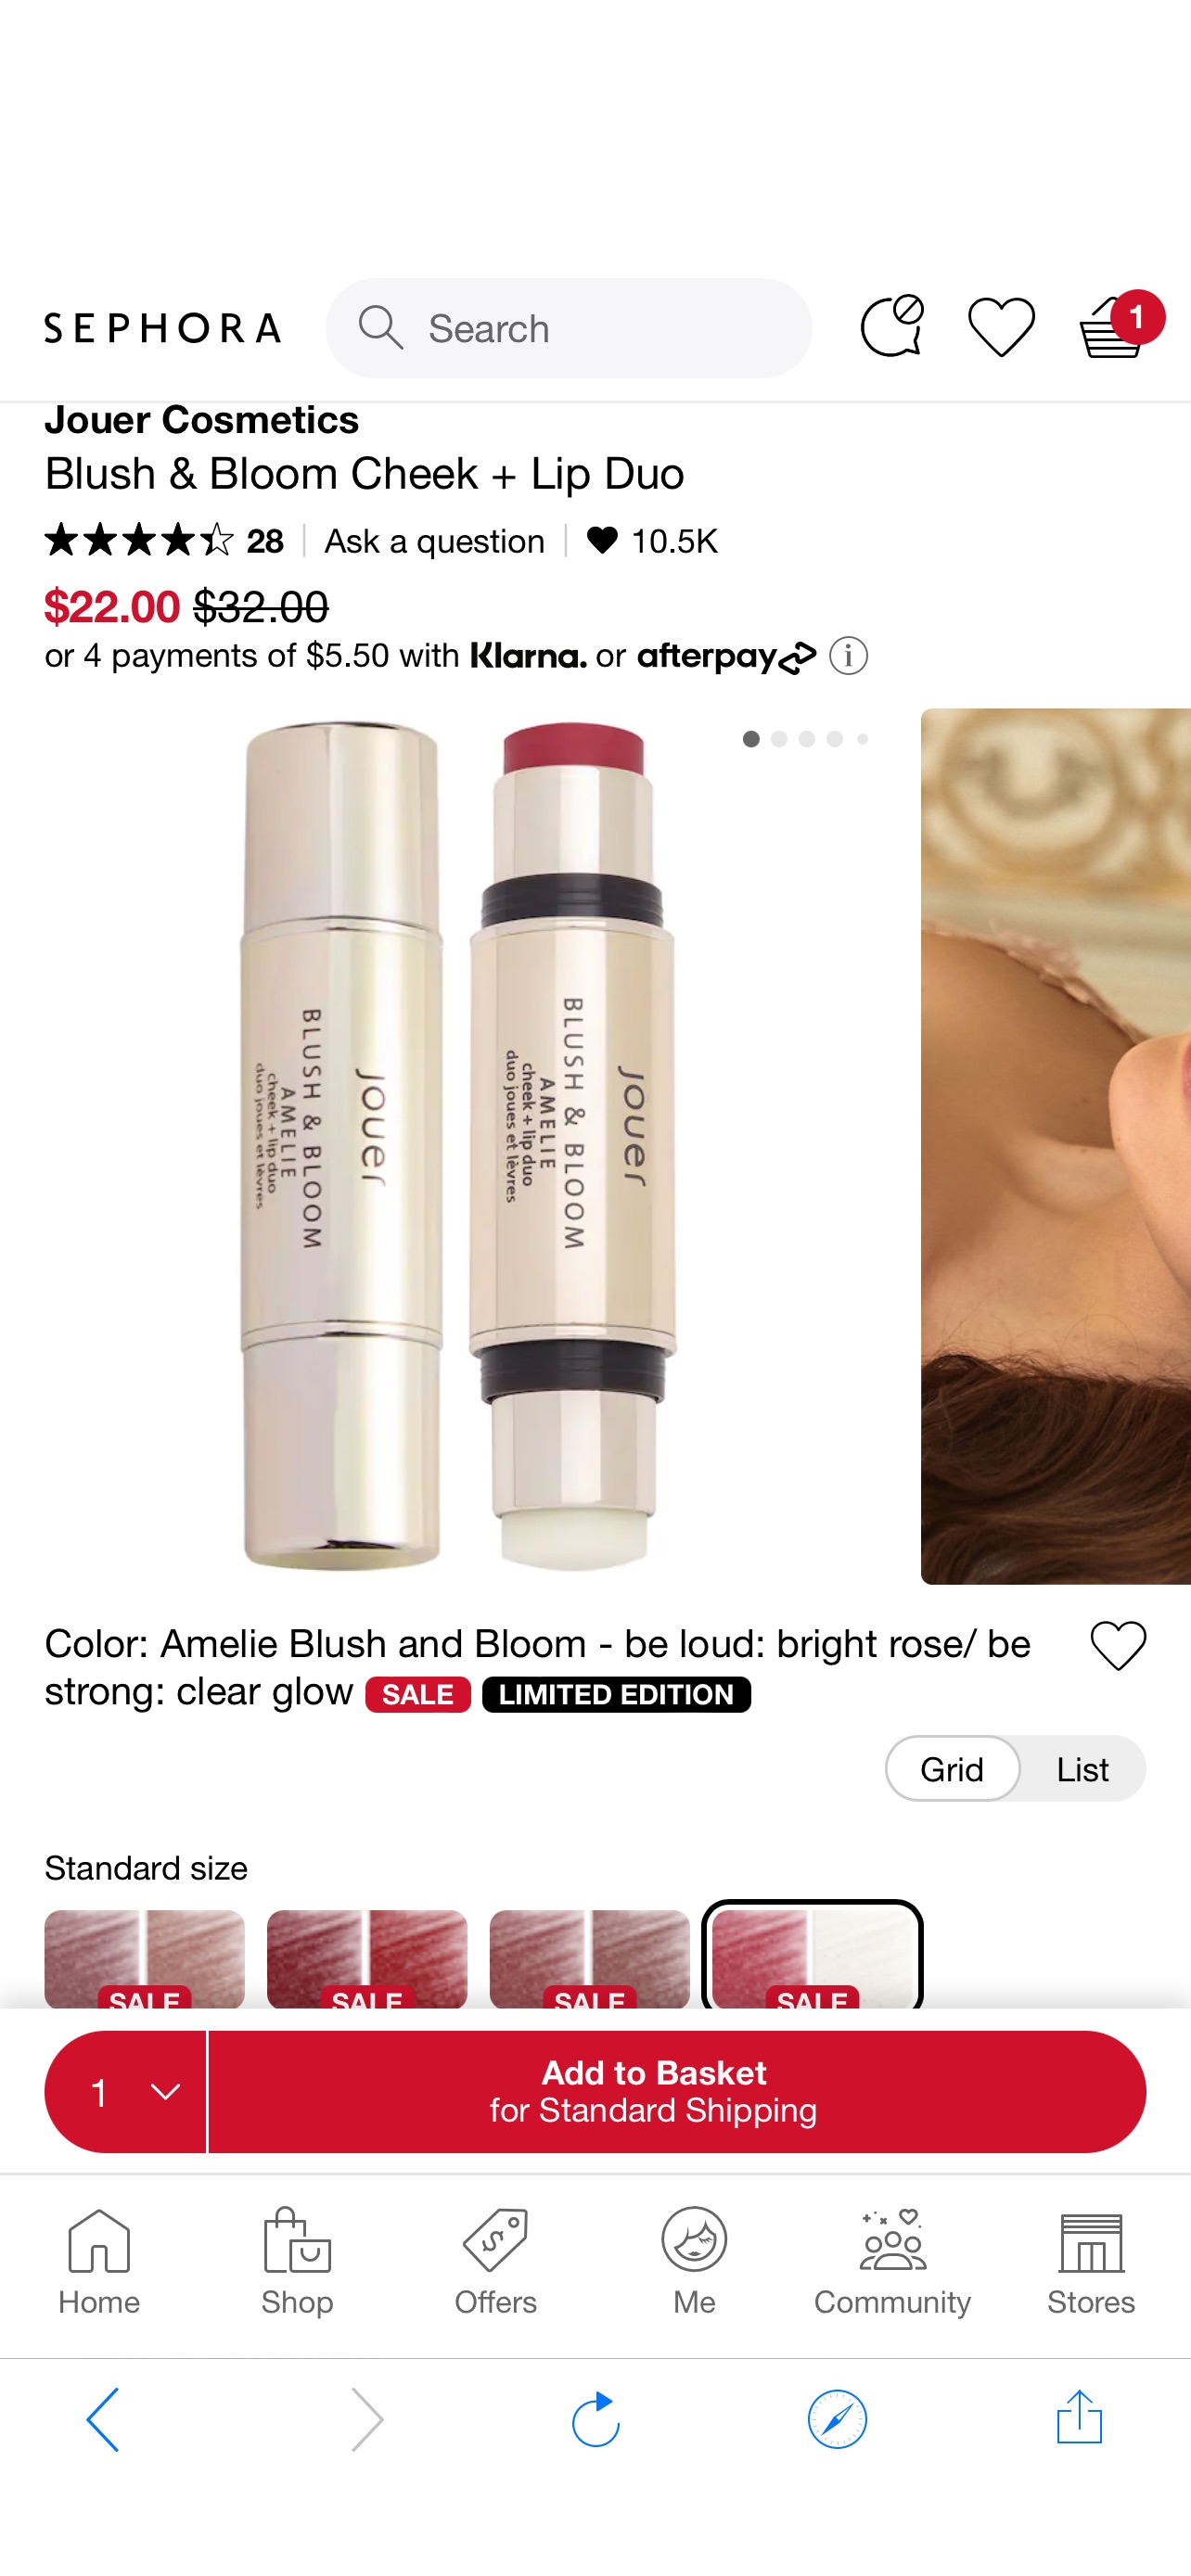 Blush & Bloom Cheek + Lip Duo - Jouer Cosmetics双头唇颊两用棒| Sephora